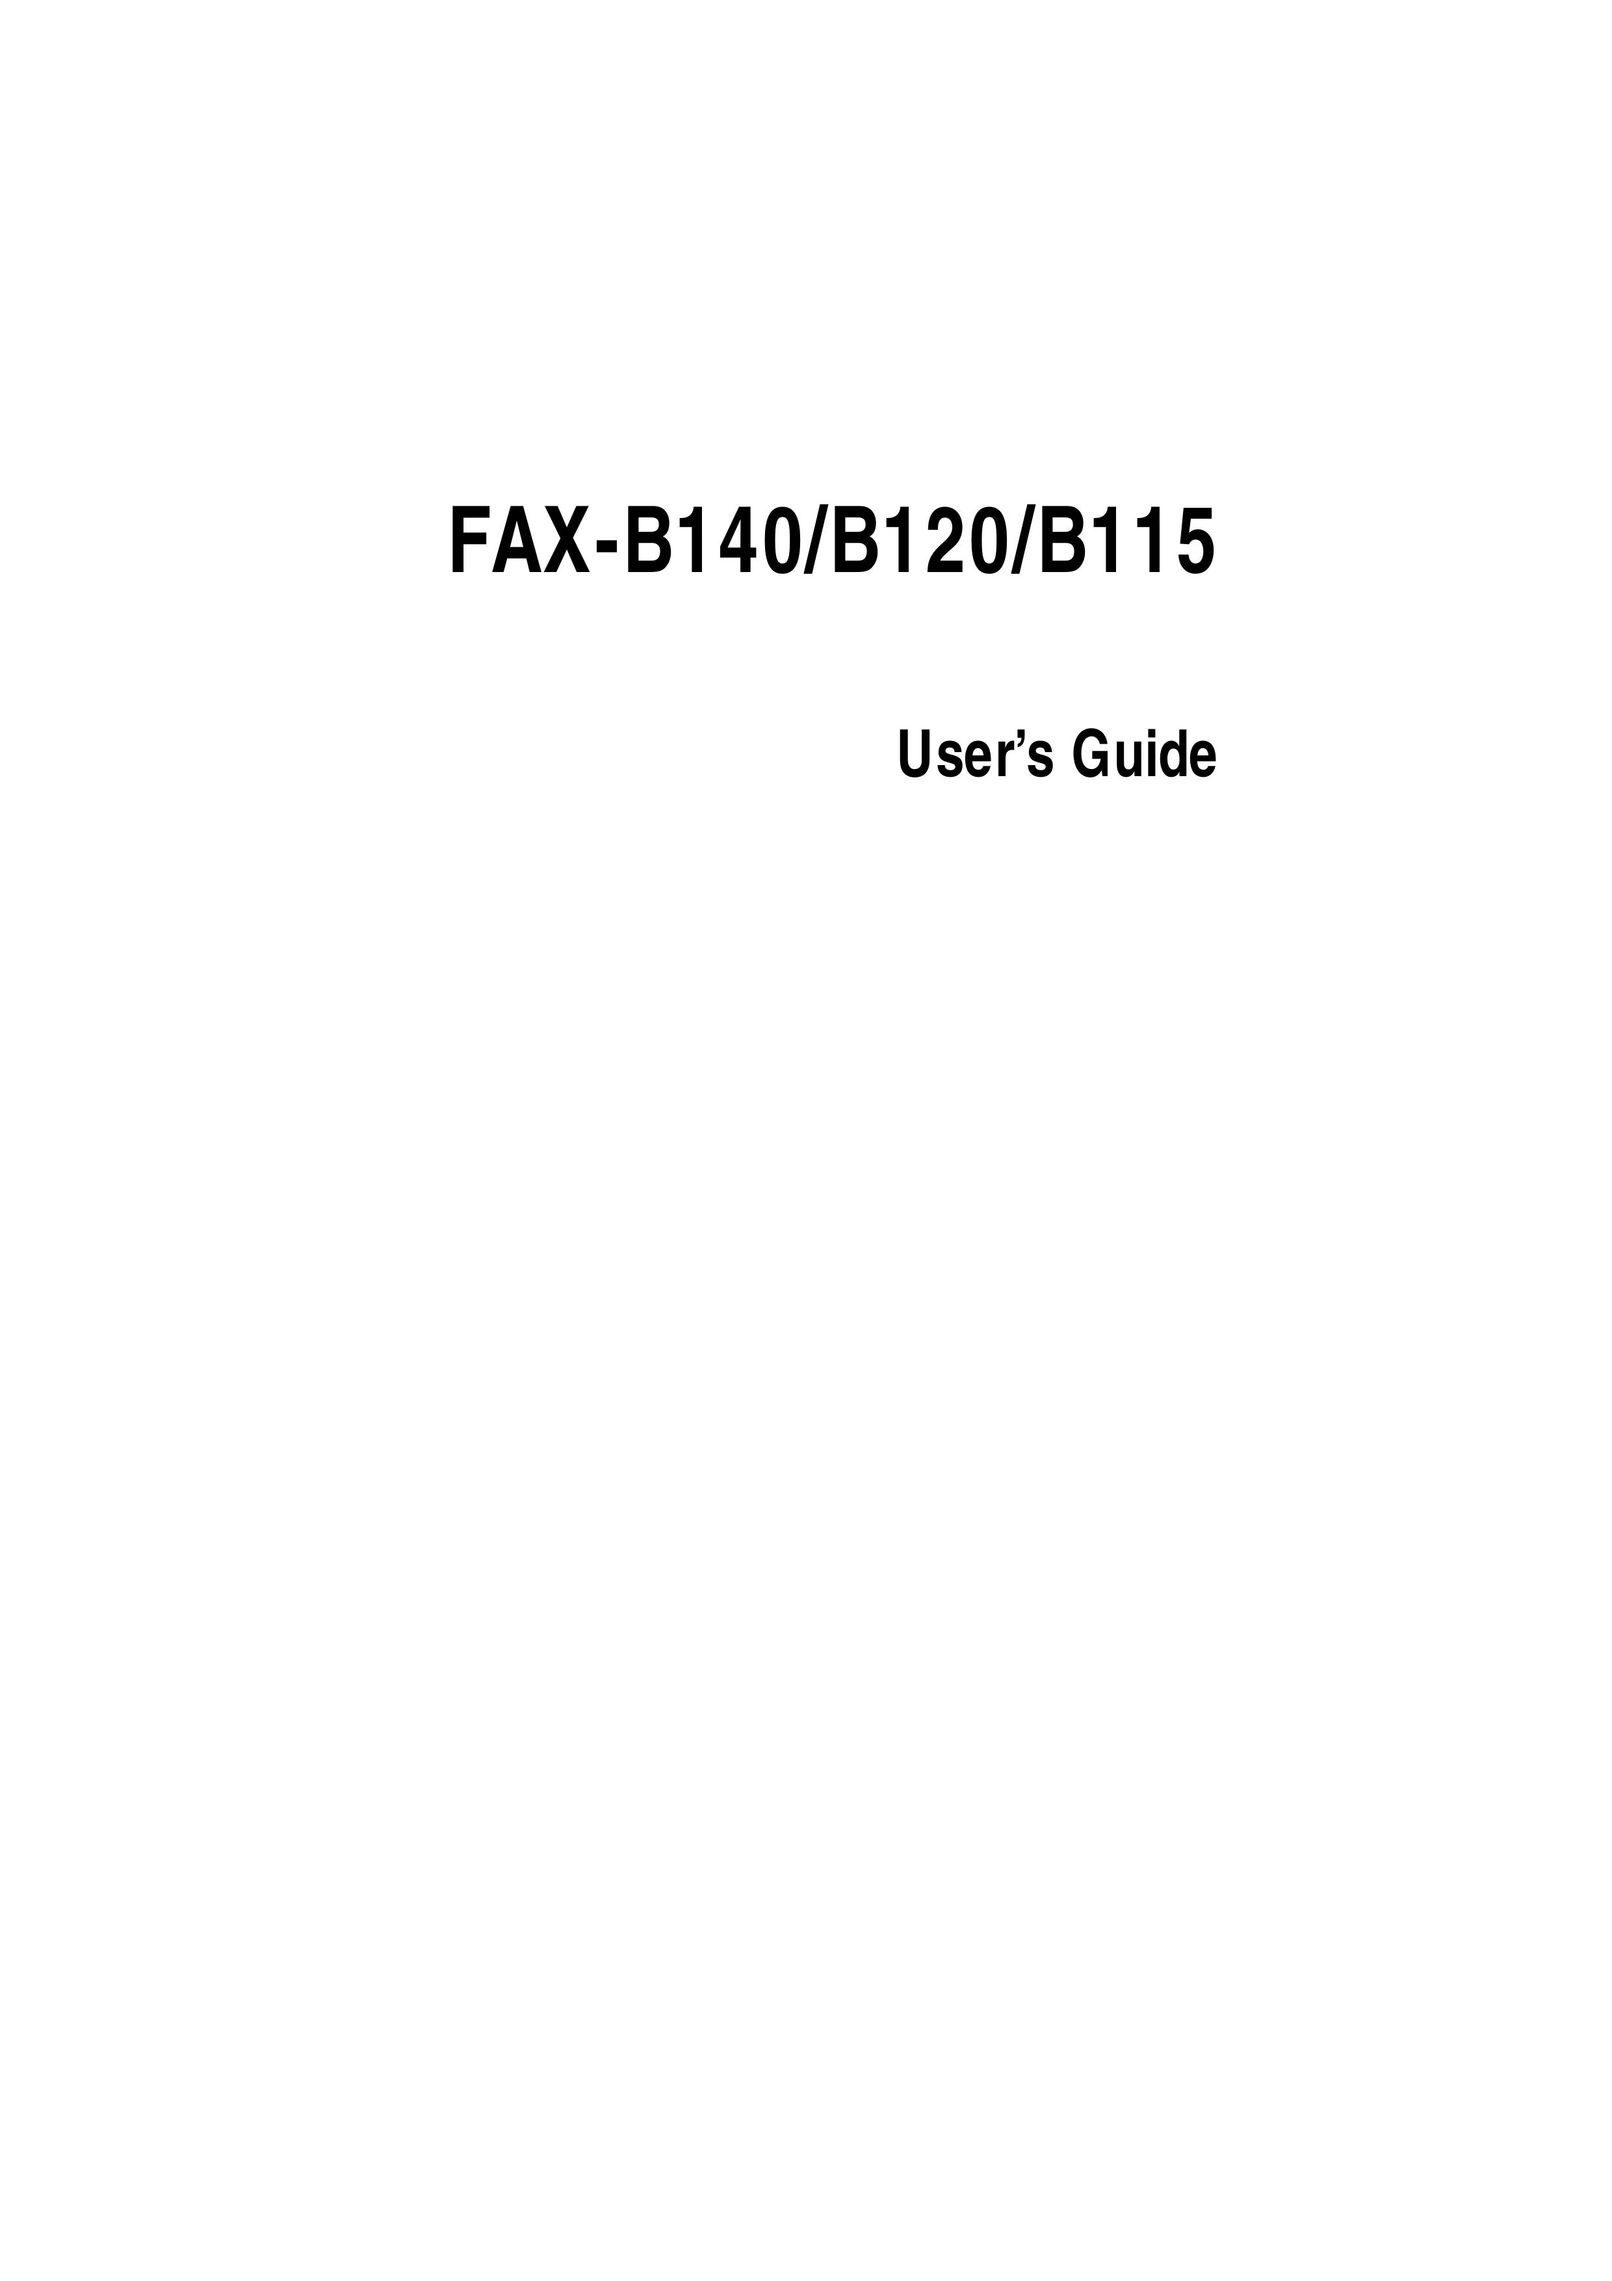 Canon B140 Fax Machine User Manual